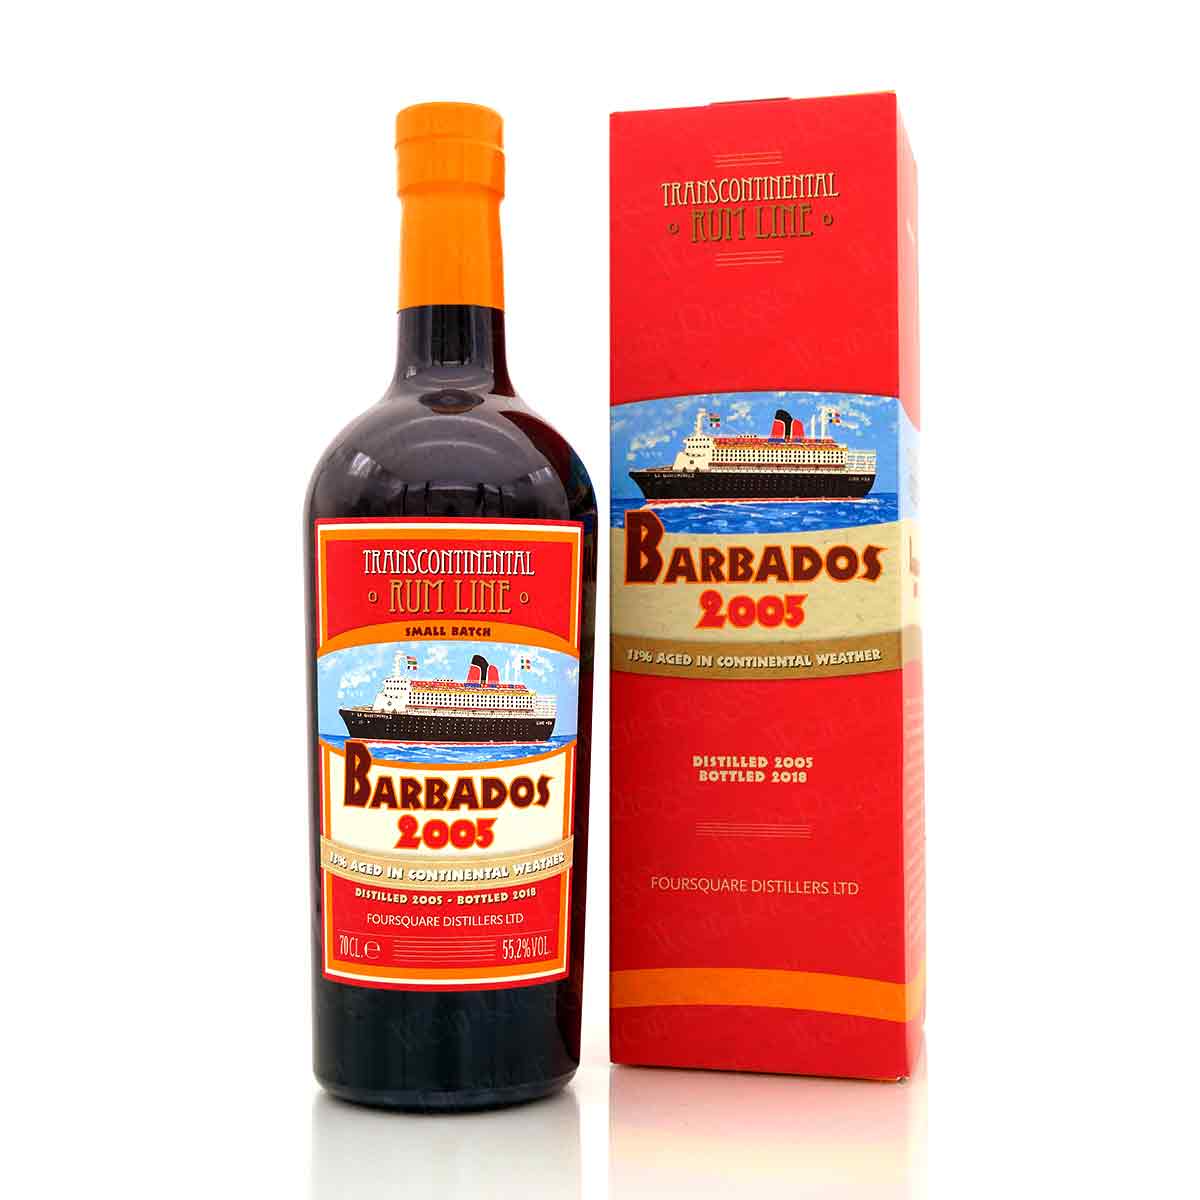 Barbados 2005 - 2018 Small Batch - Transcontinental Rum Line